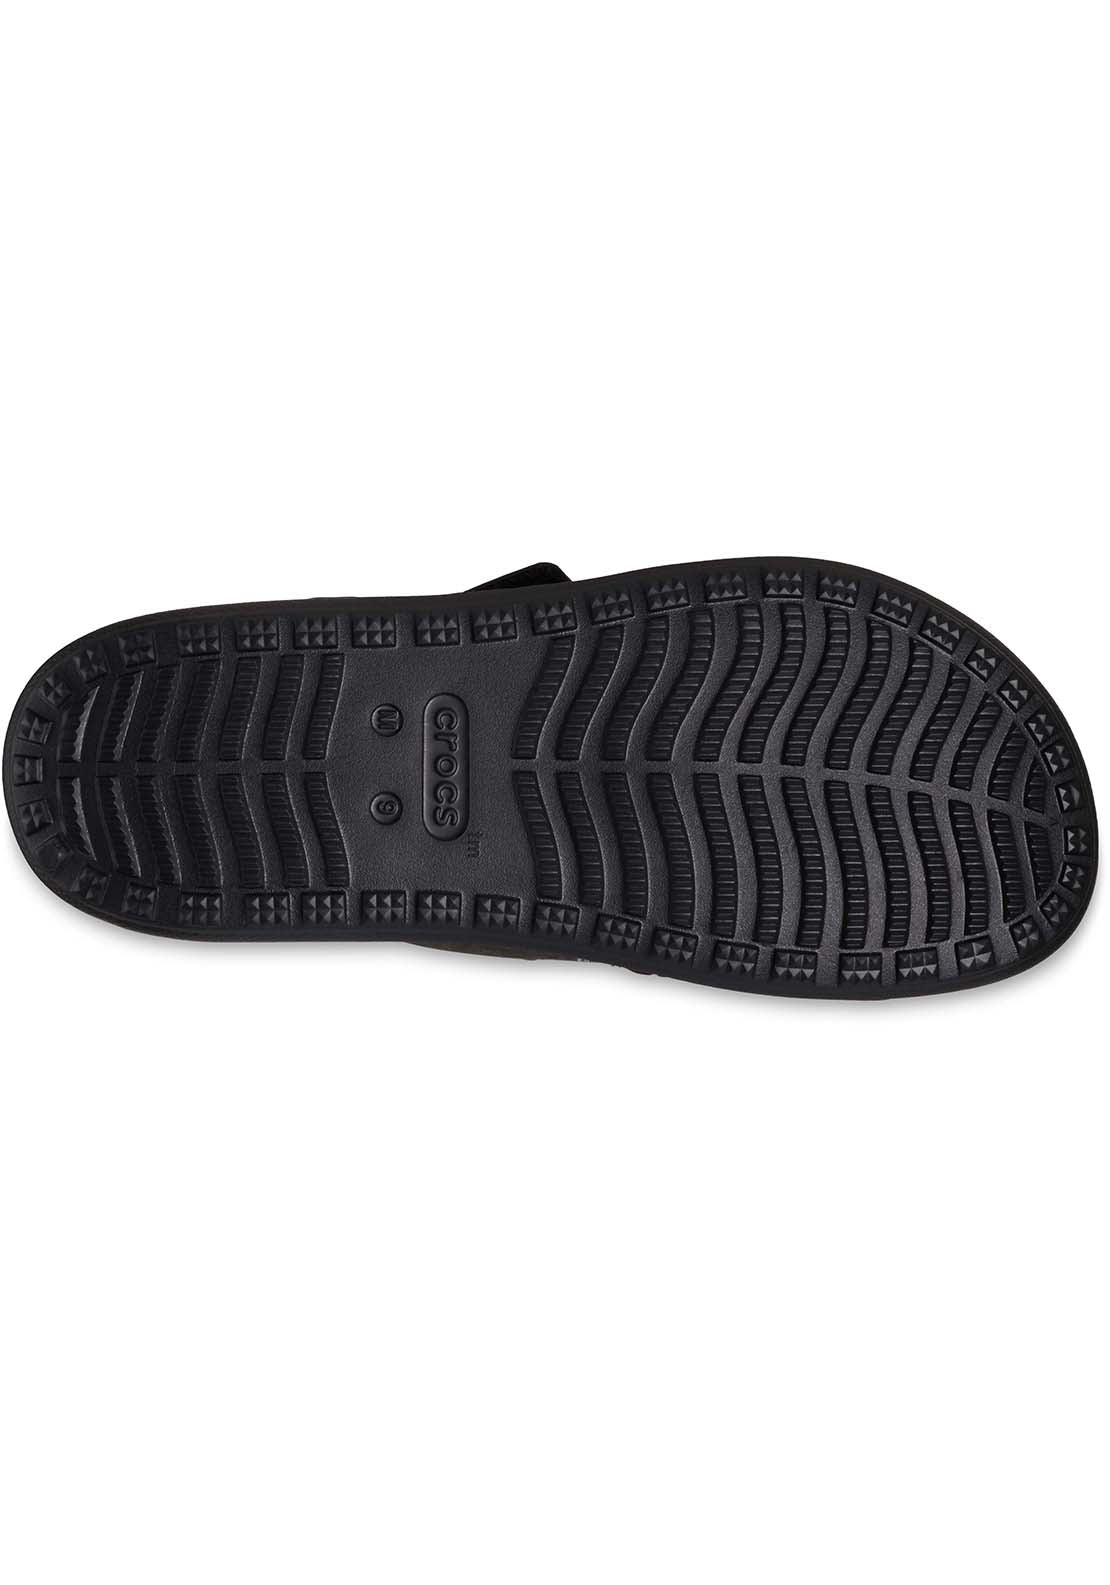 Crocs Yukon Vista II Sandal - Black 6 Shaws Department Stores